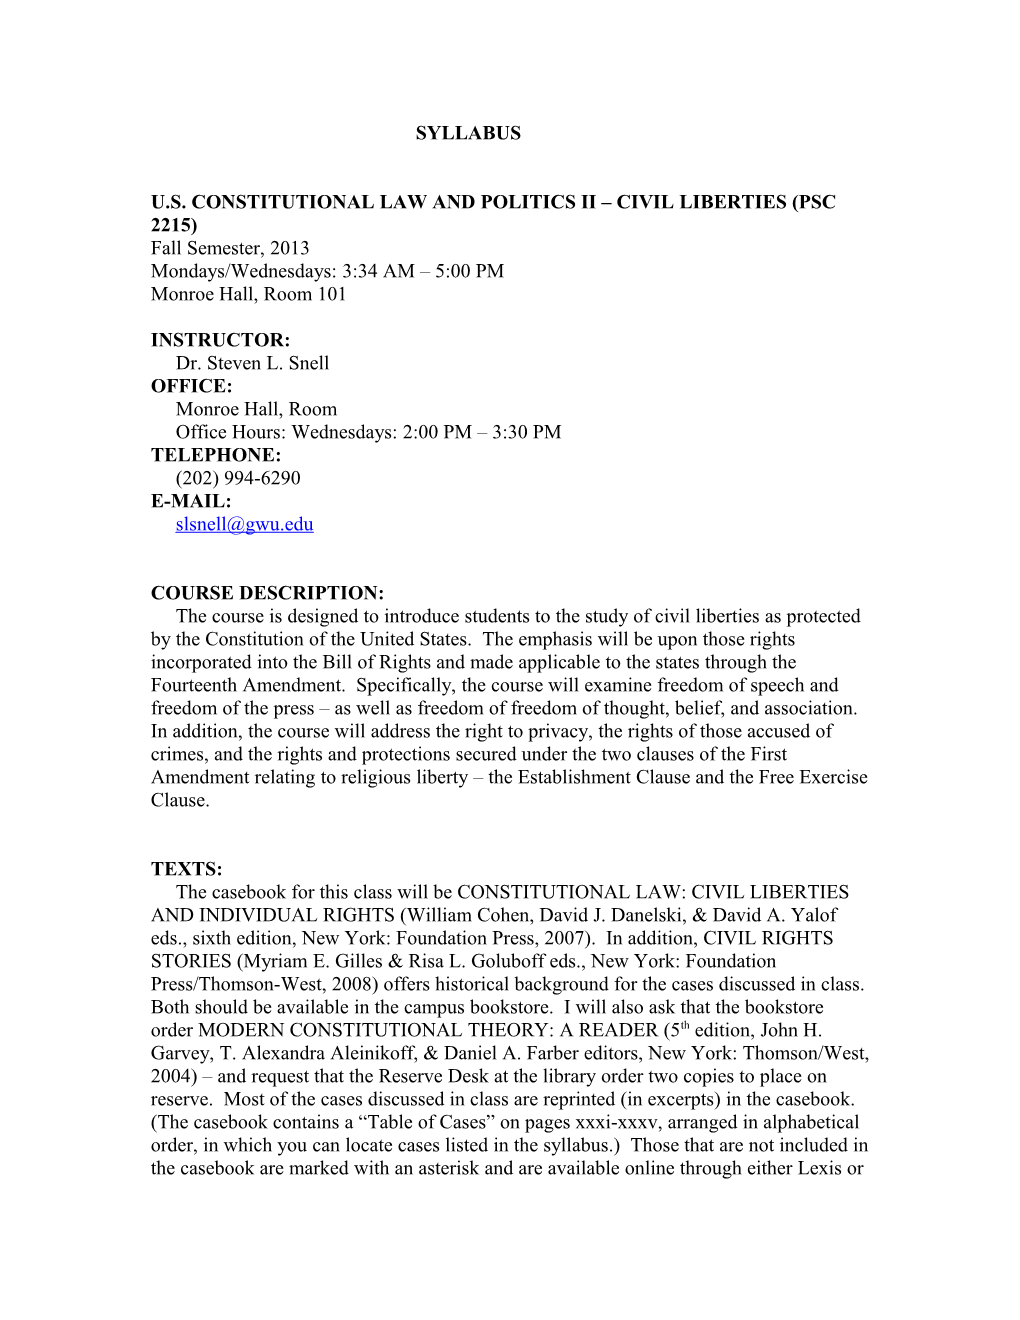 U.S. Constitutional Law and Politics Ii Civil Liberties (Psc 2215)